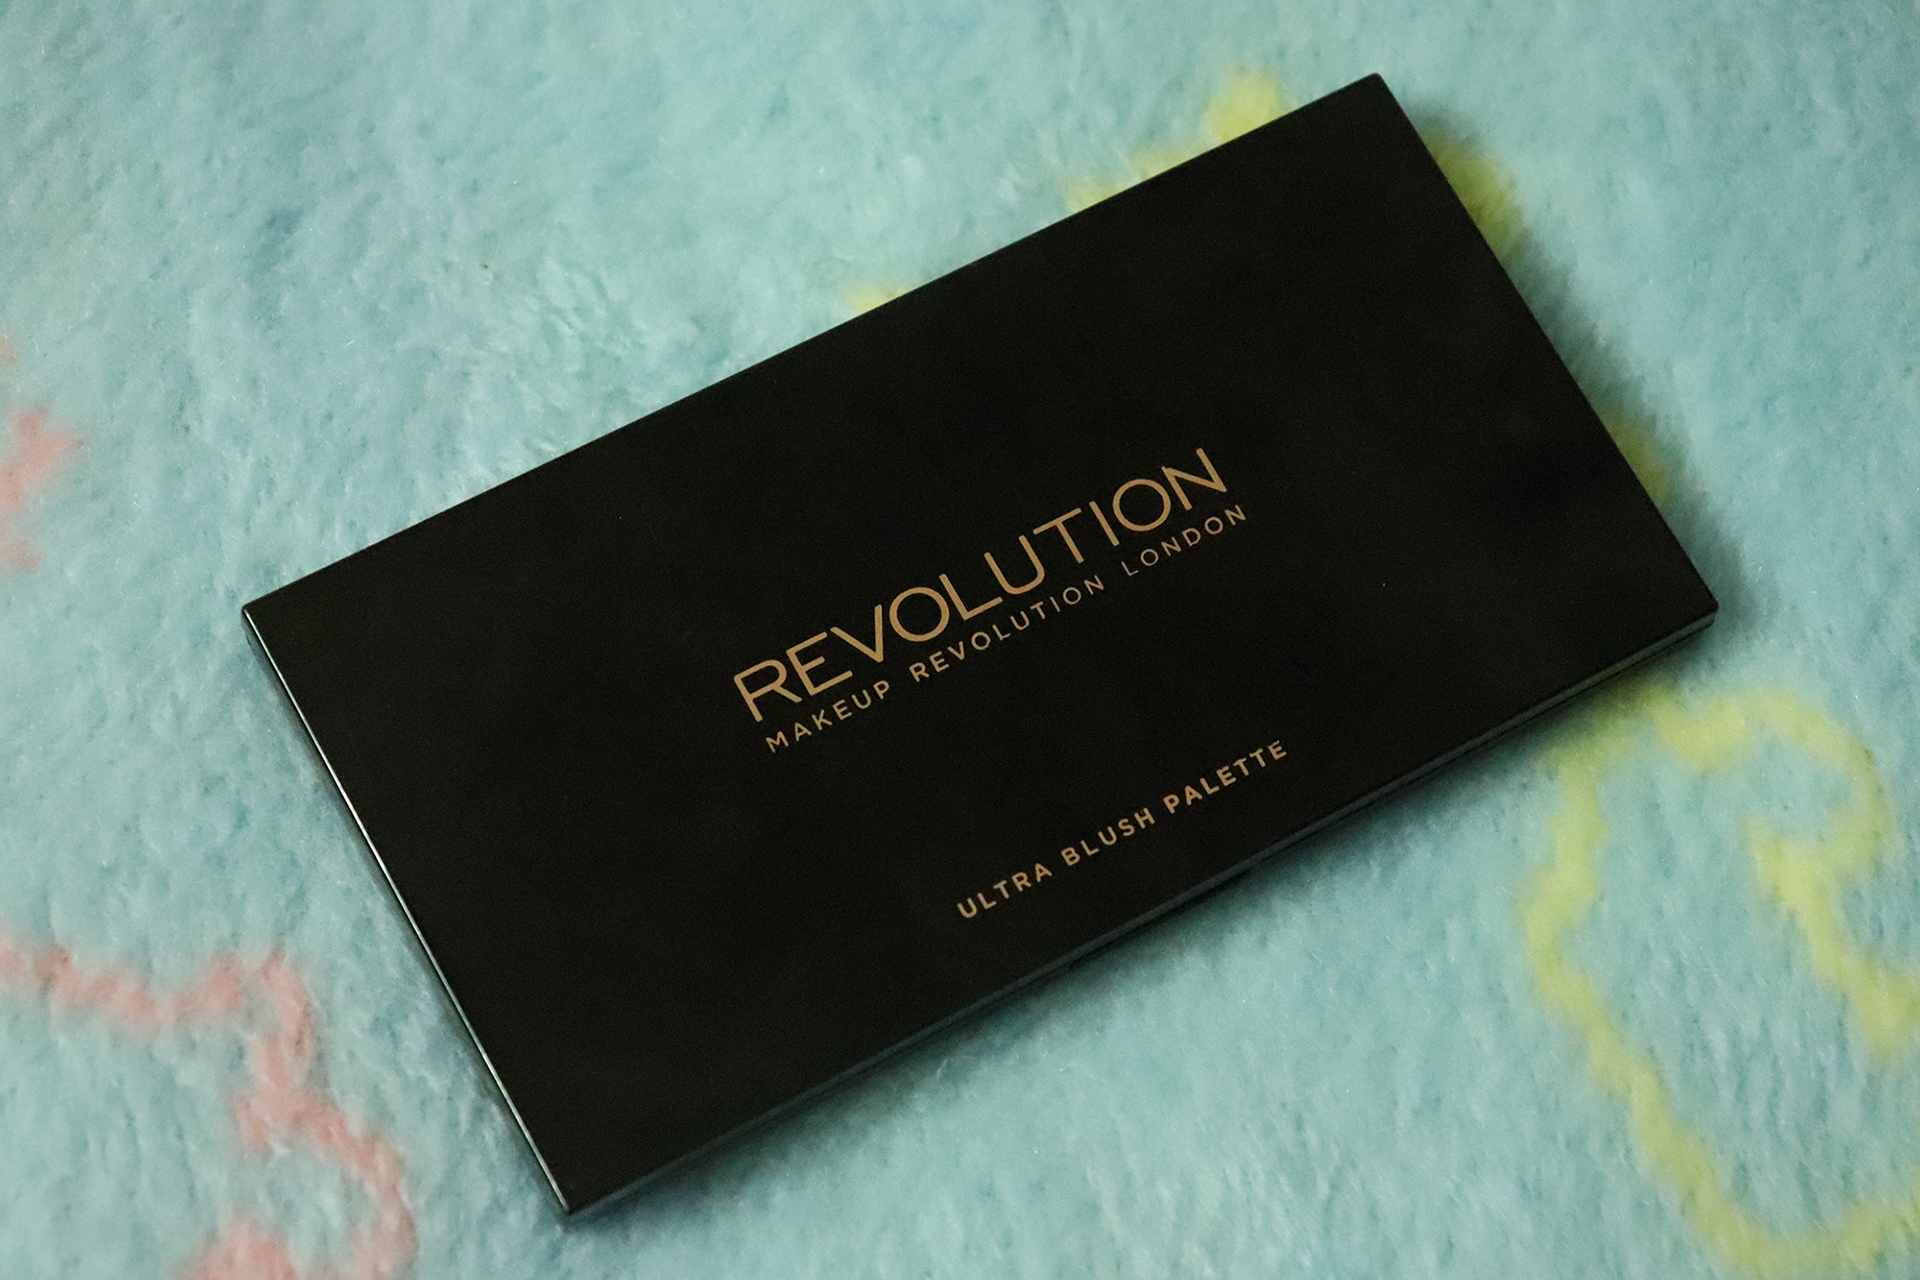 Makeup Revolution Golden Sugar 2 Rose Gold Ultra Professional Blush Palette Review